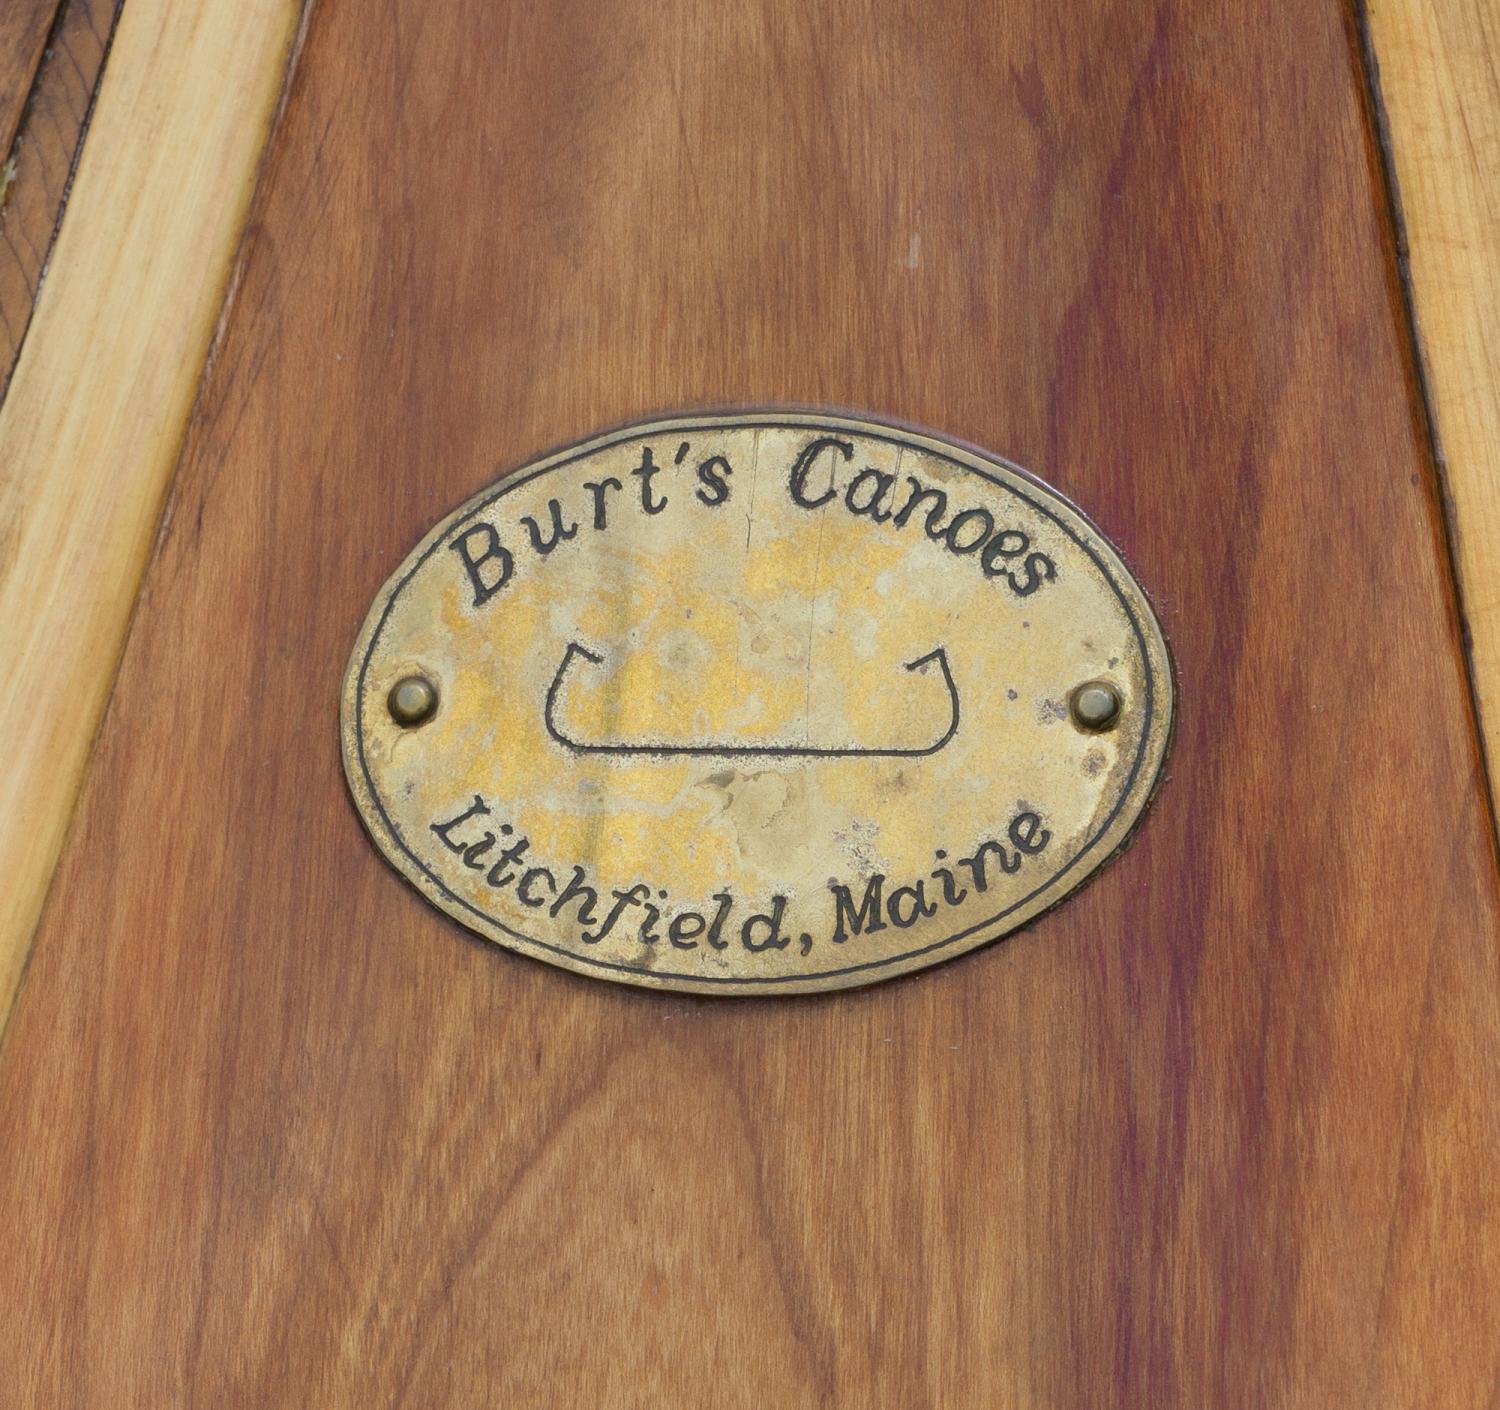 Burt's Canoes tag